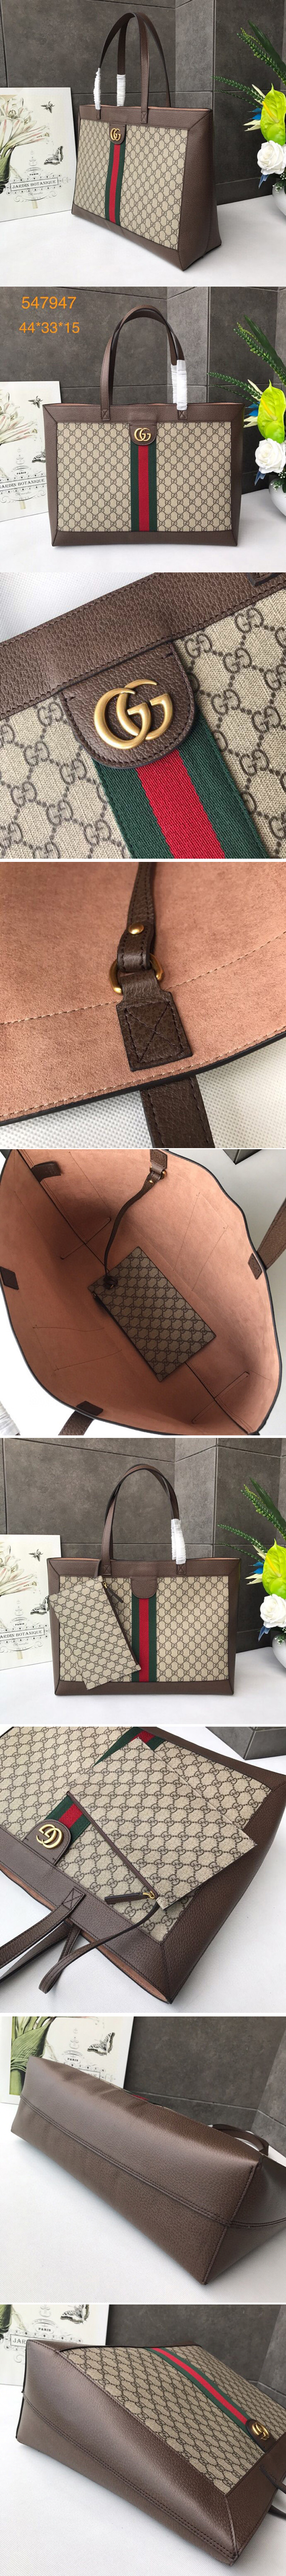 Replica Gucci 547947 Ophidia GG tote bags in Beige/ebony soft GG Supreme